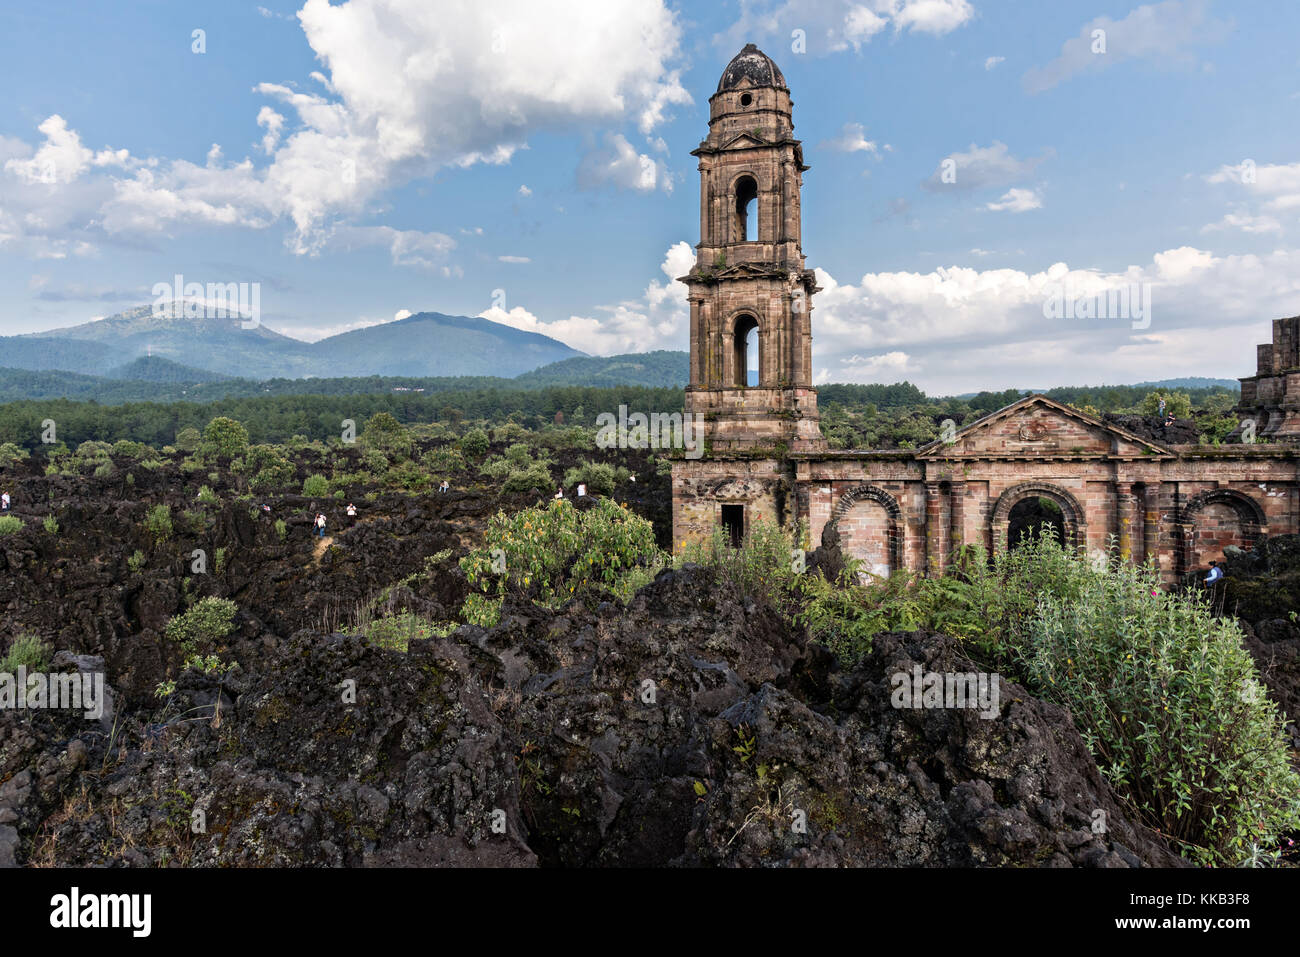 El campanario de la iglesia de San Juan Parangaricutiro se alza de un mar  de roca de lava seca en el remoto pueblo de San Juan Parangaricutiro,  Michoacán, México. Esta iglesia es